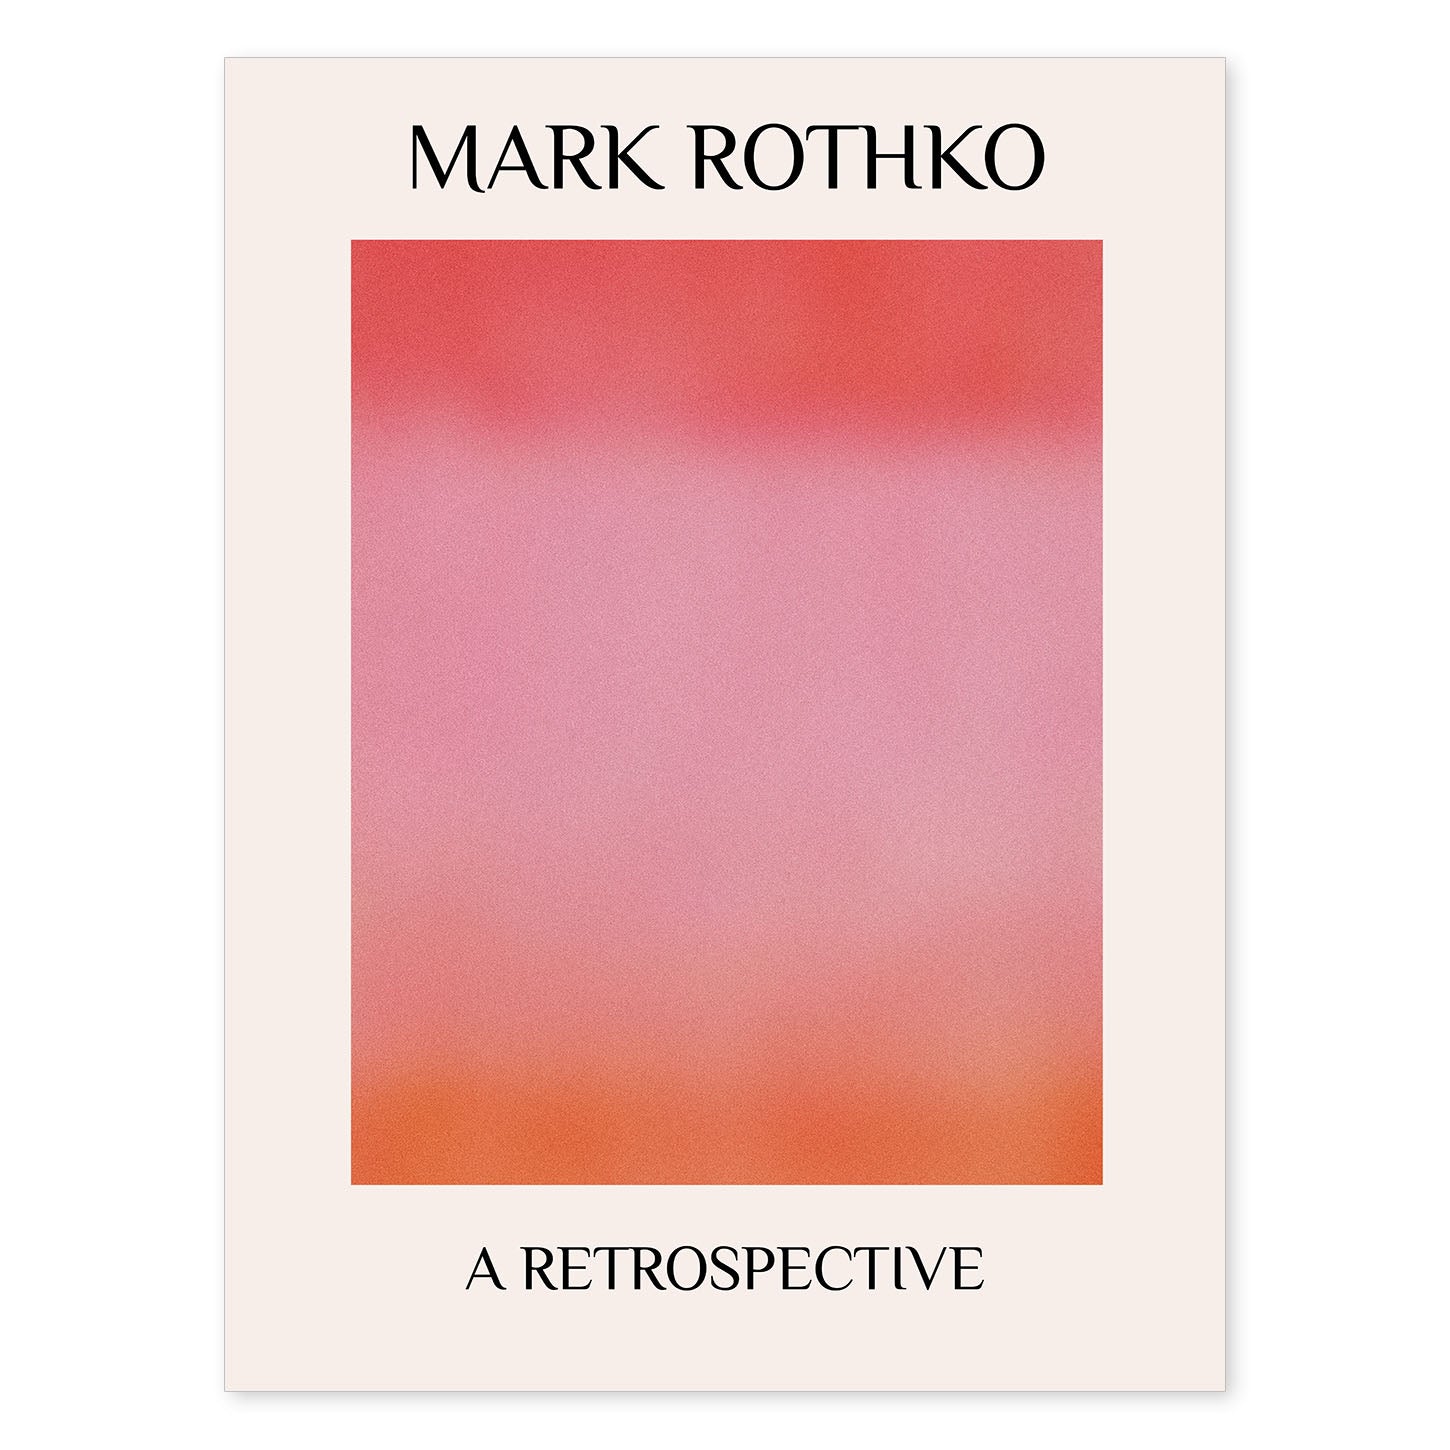 Lamina artistica decorativa con ilustración de Exposición Rothko 6 estilo expresionismo abstracto-Artwork-Nacnic-A4-Sin marco-Nacnic Estudio SL